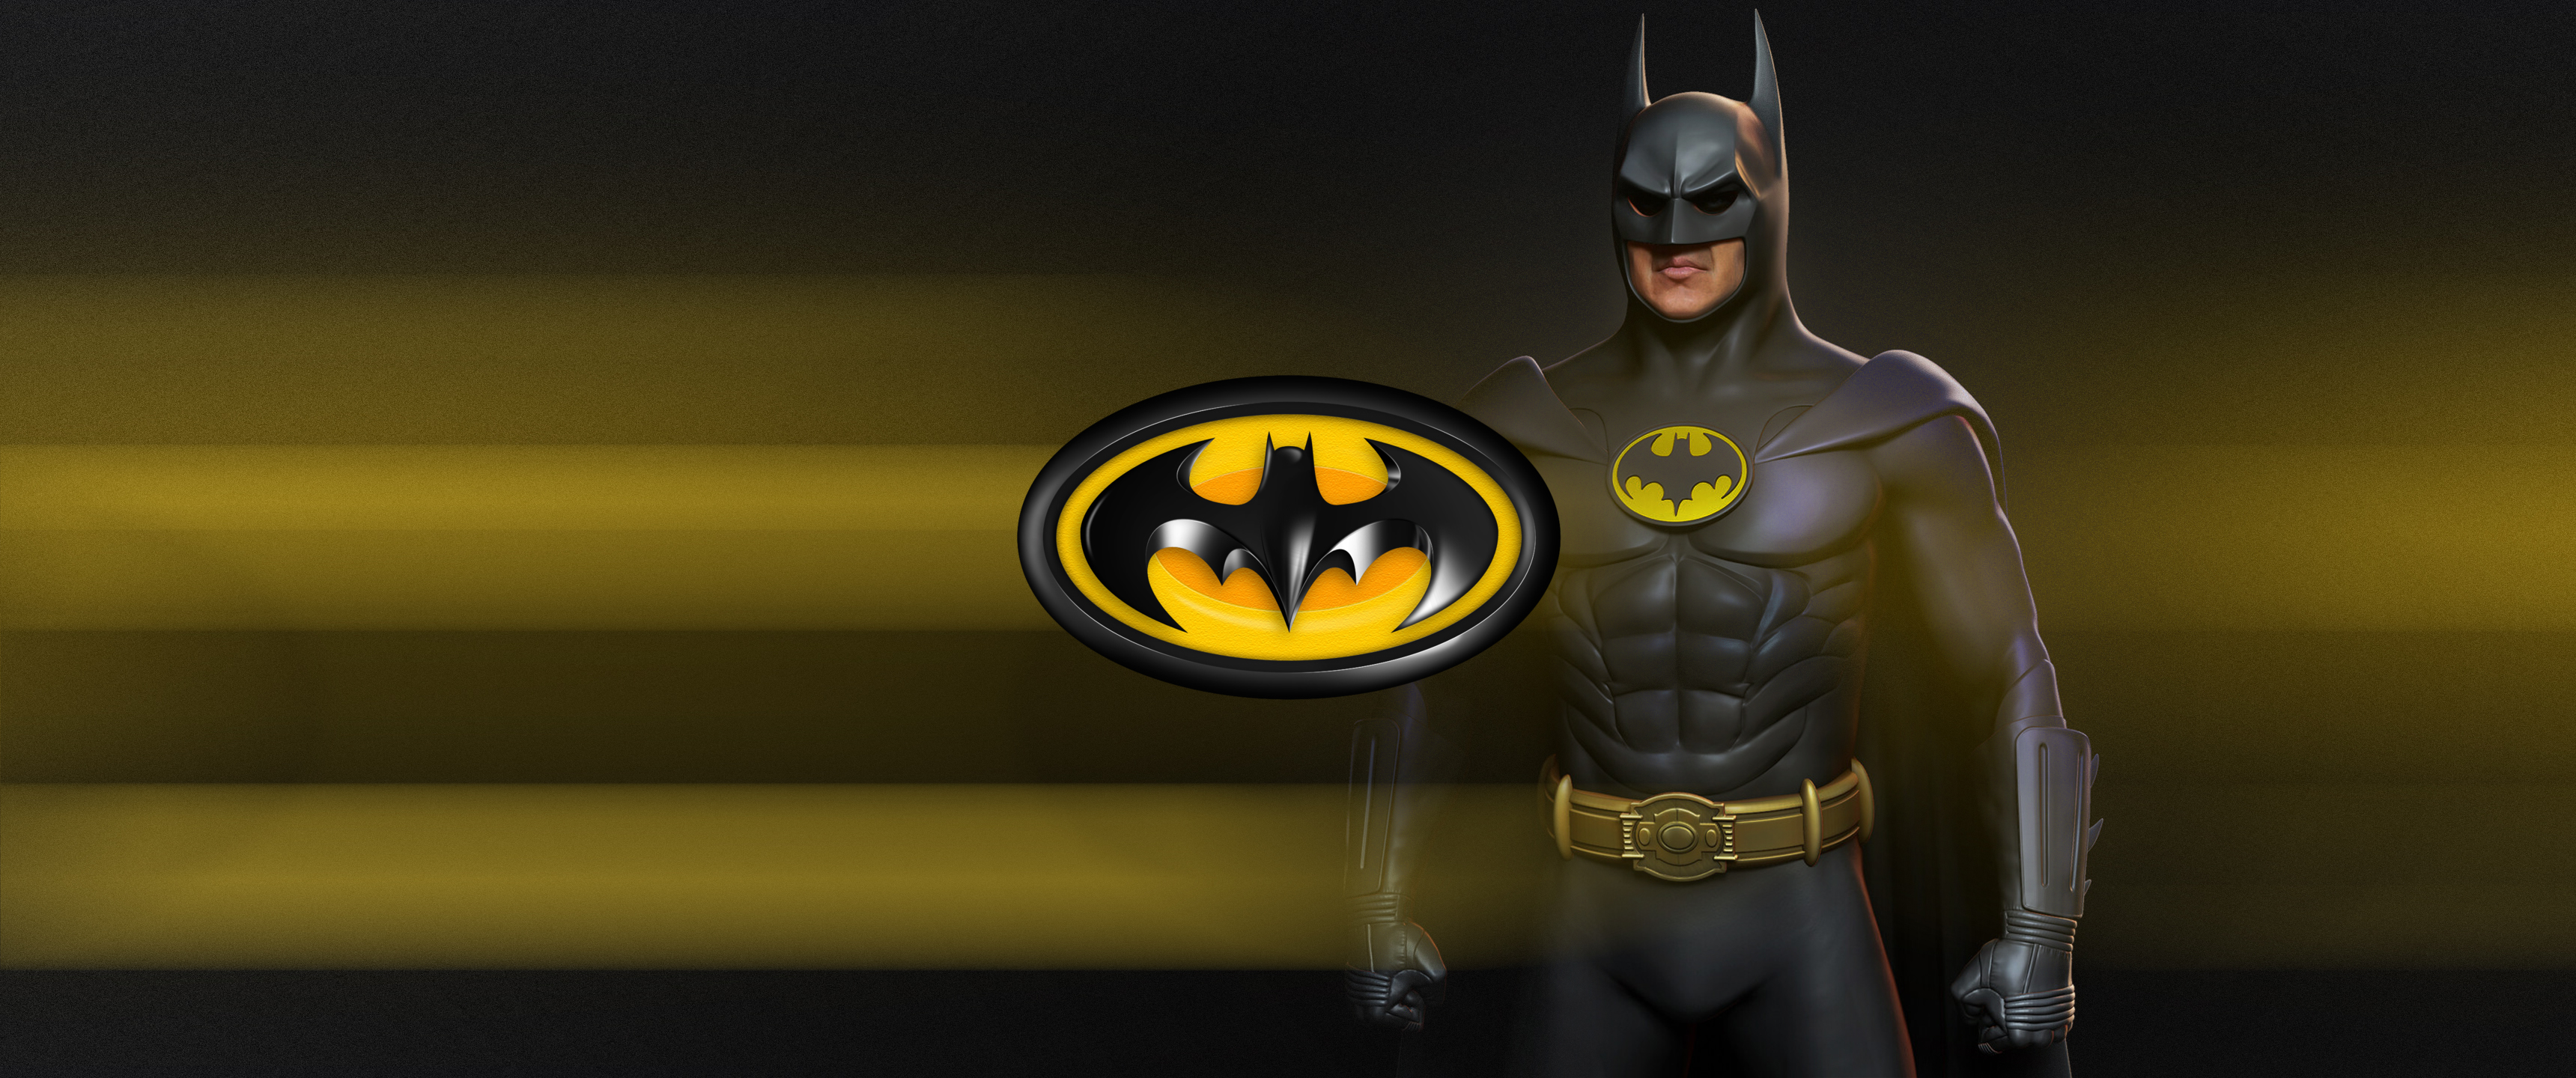 Gotham City Sirens DC Comics Batman Simple Background Logo Wallpaper -  Resolution:3440x1440 - ID:1361312 